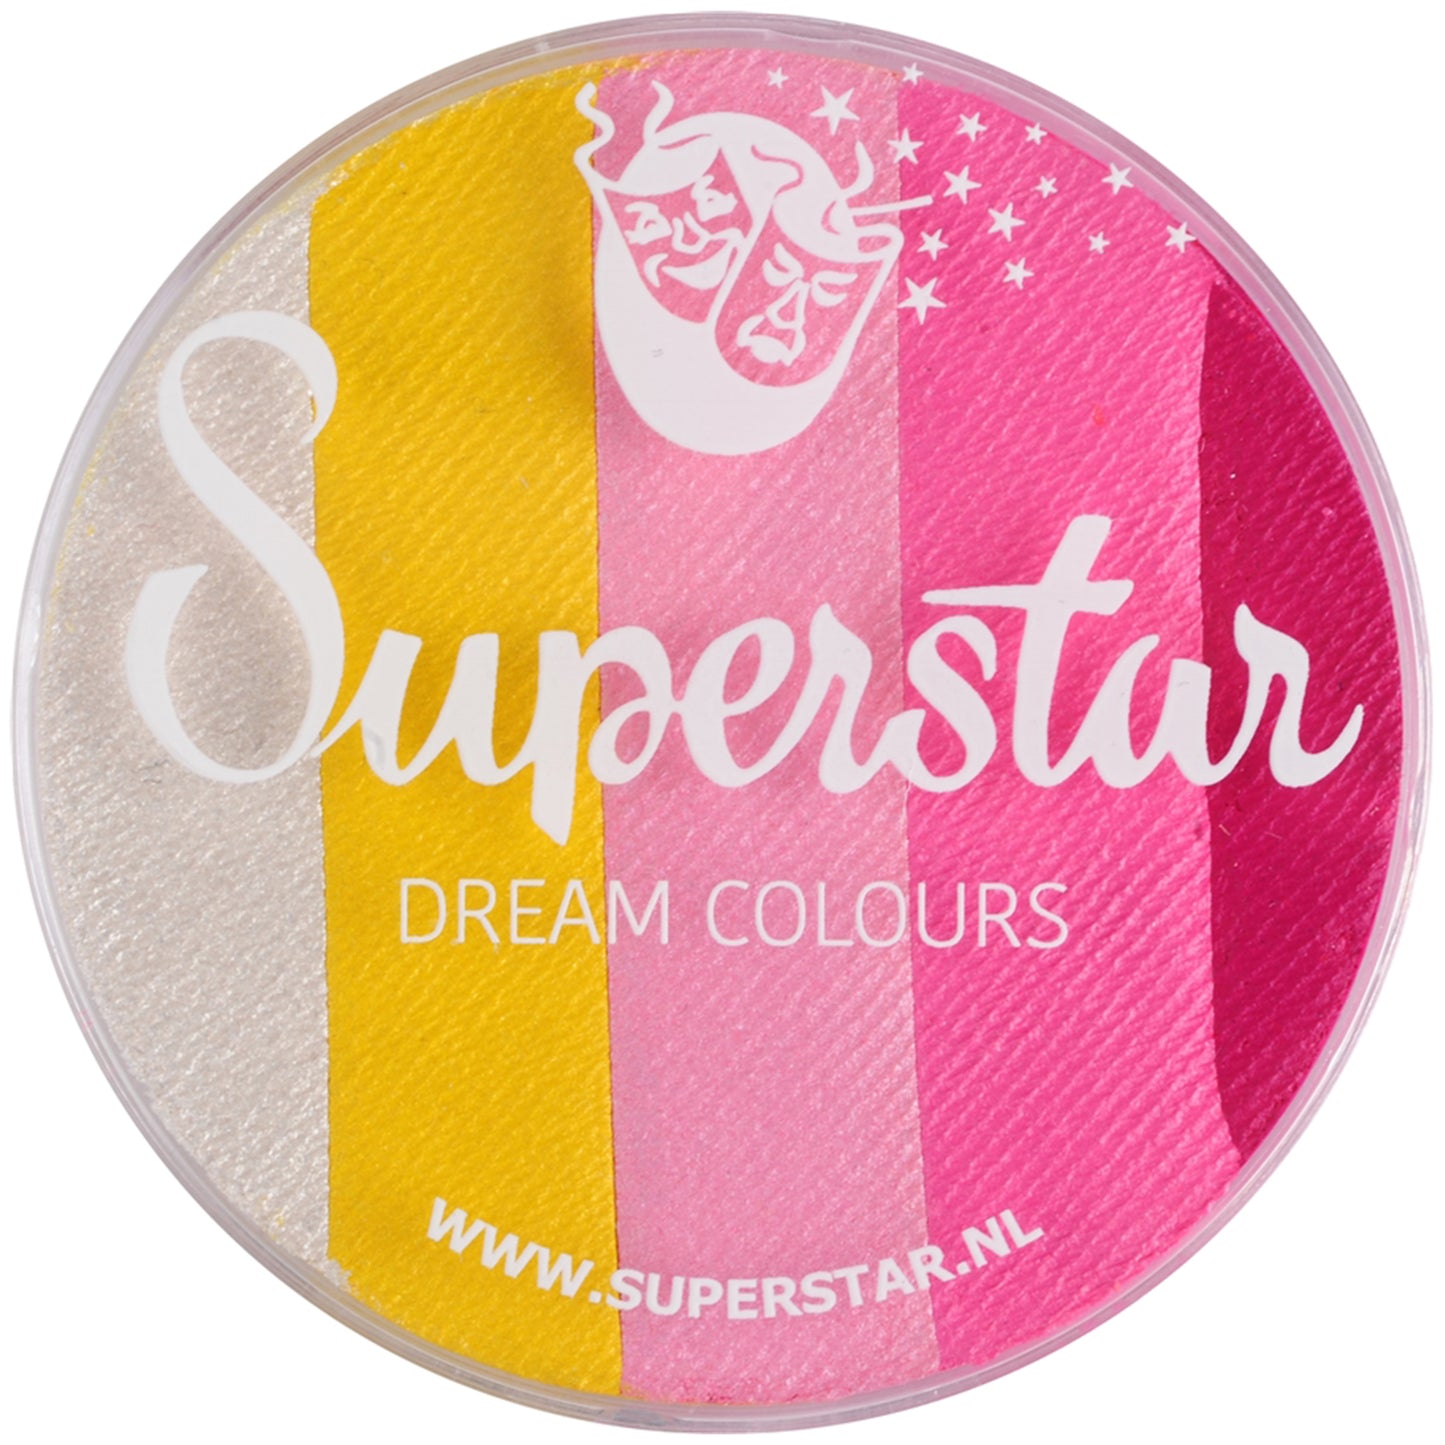 Superstar Dream Colors Rainbow Cake - Sweet #911 (45 gm)